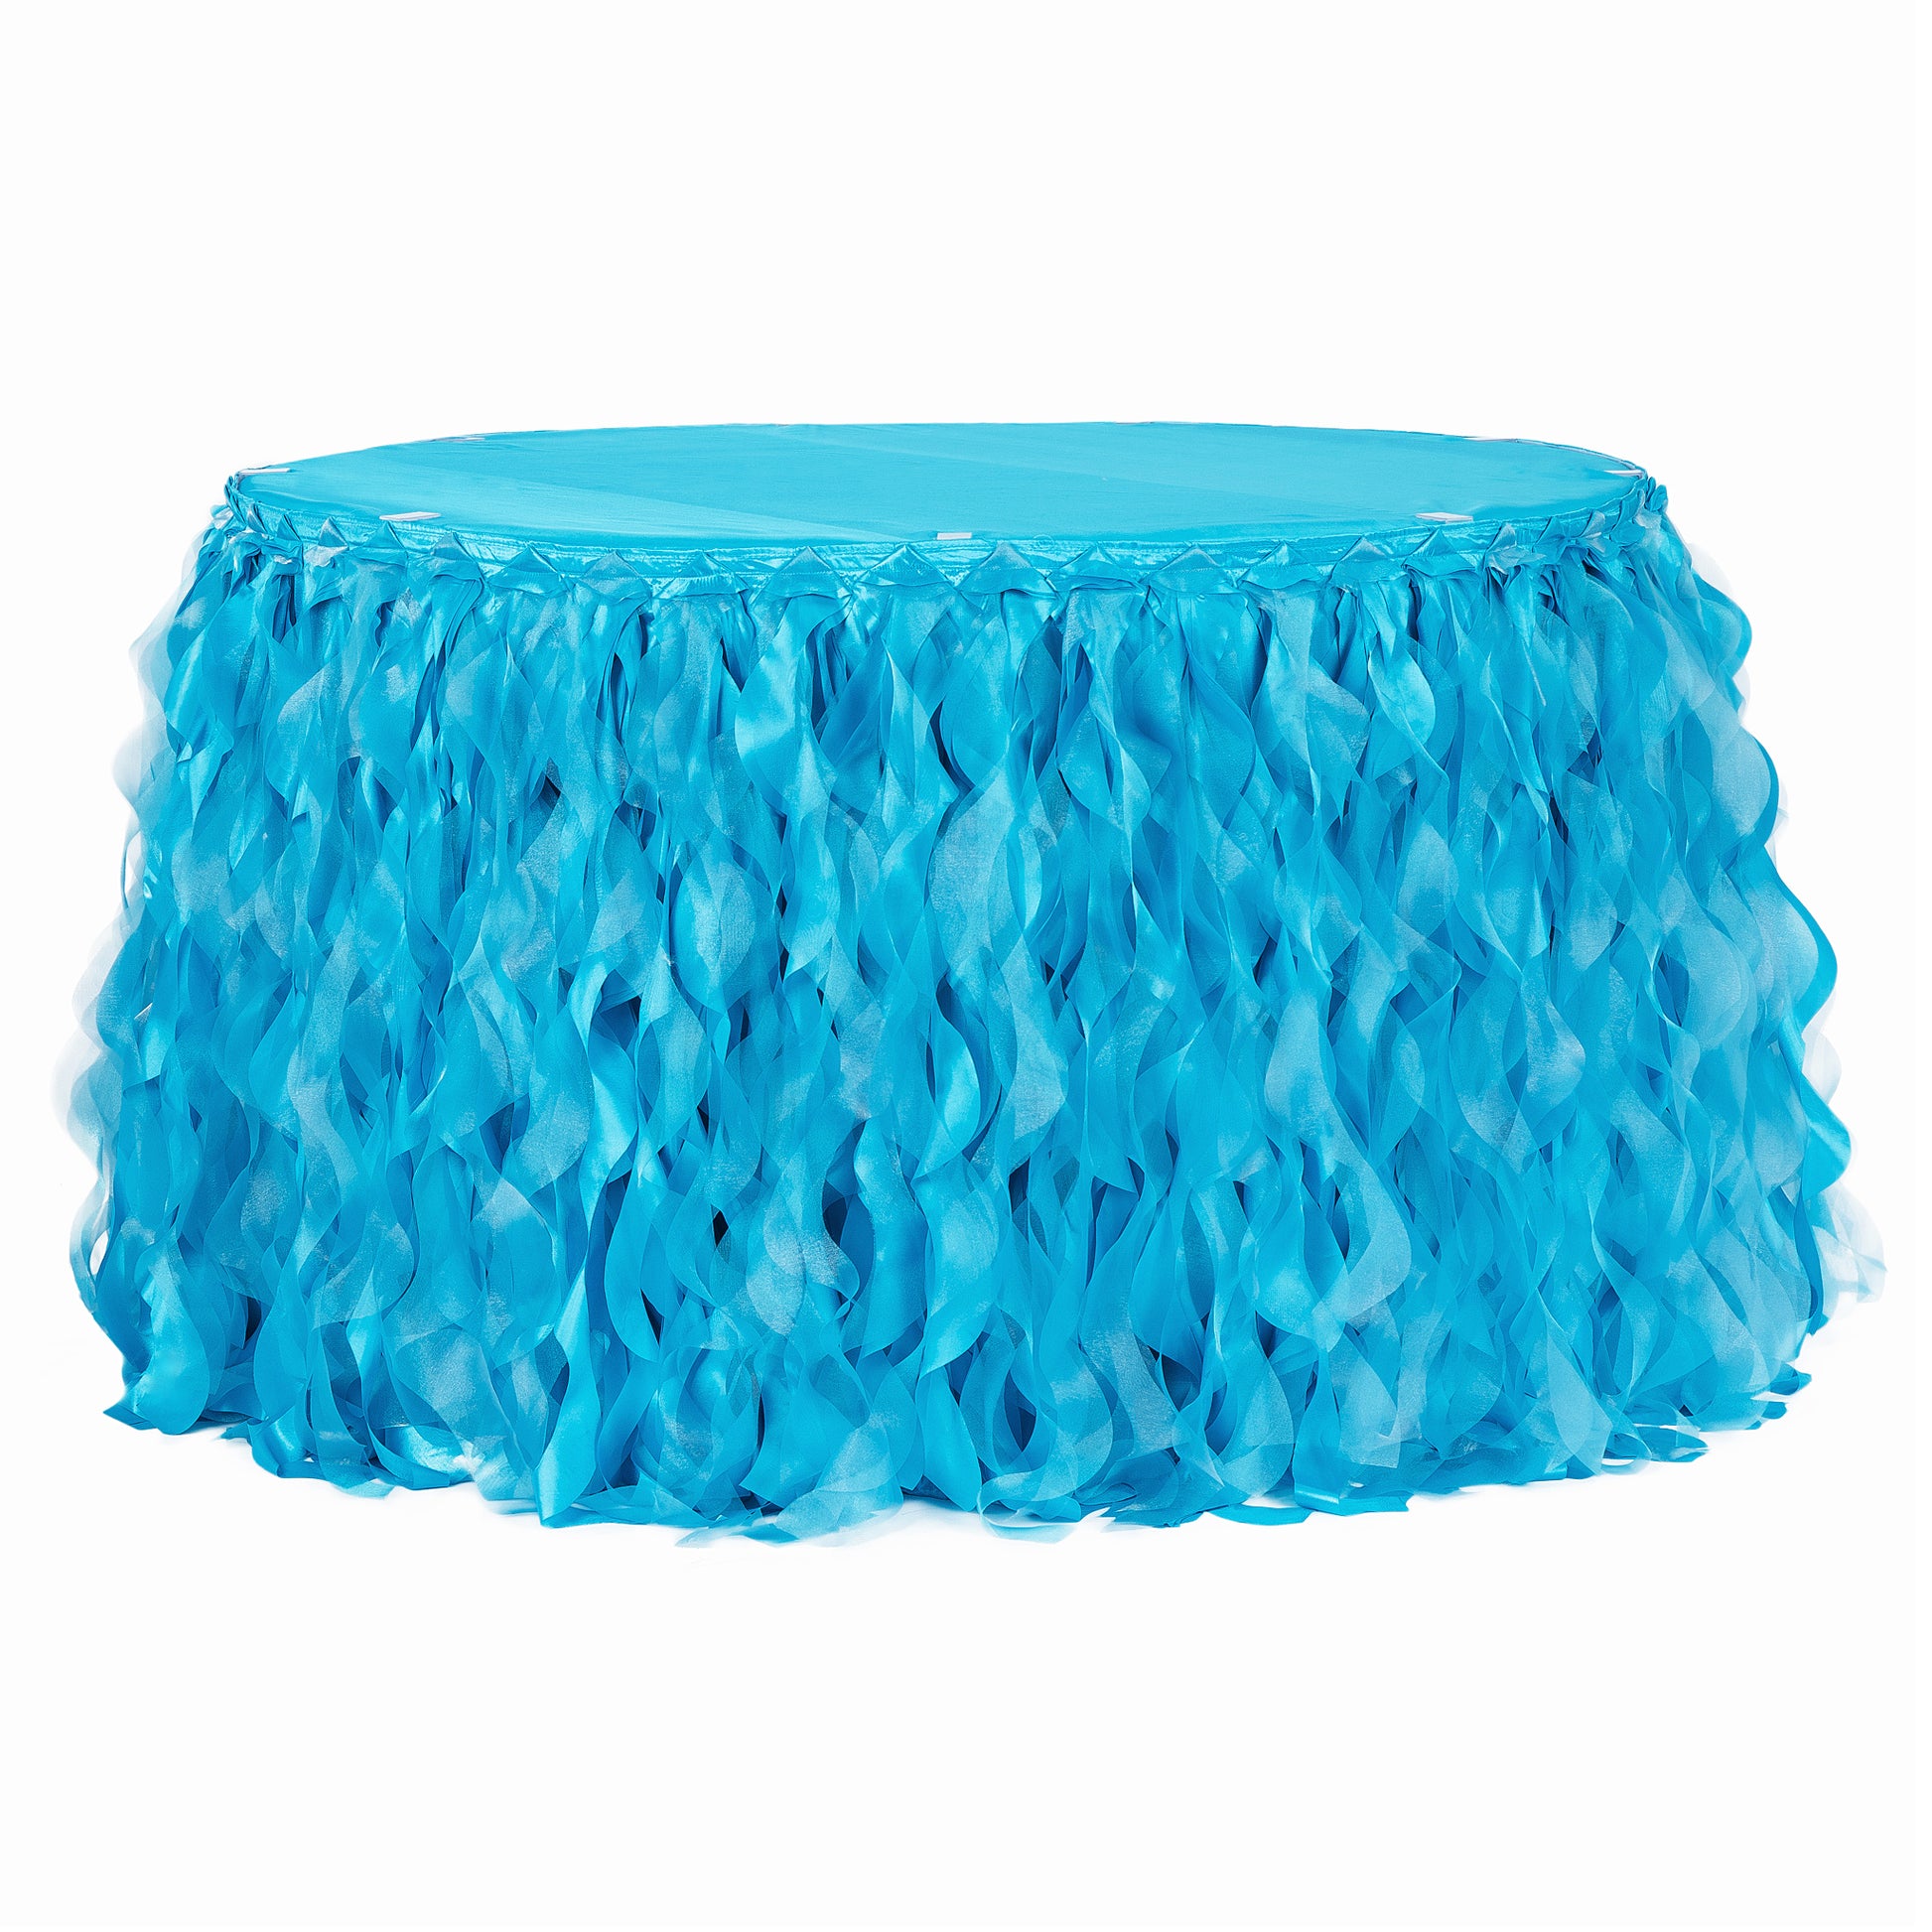 Curly Willow 17ft Table Skirt - Aqua Blue - CV Linens